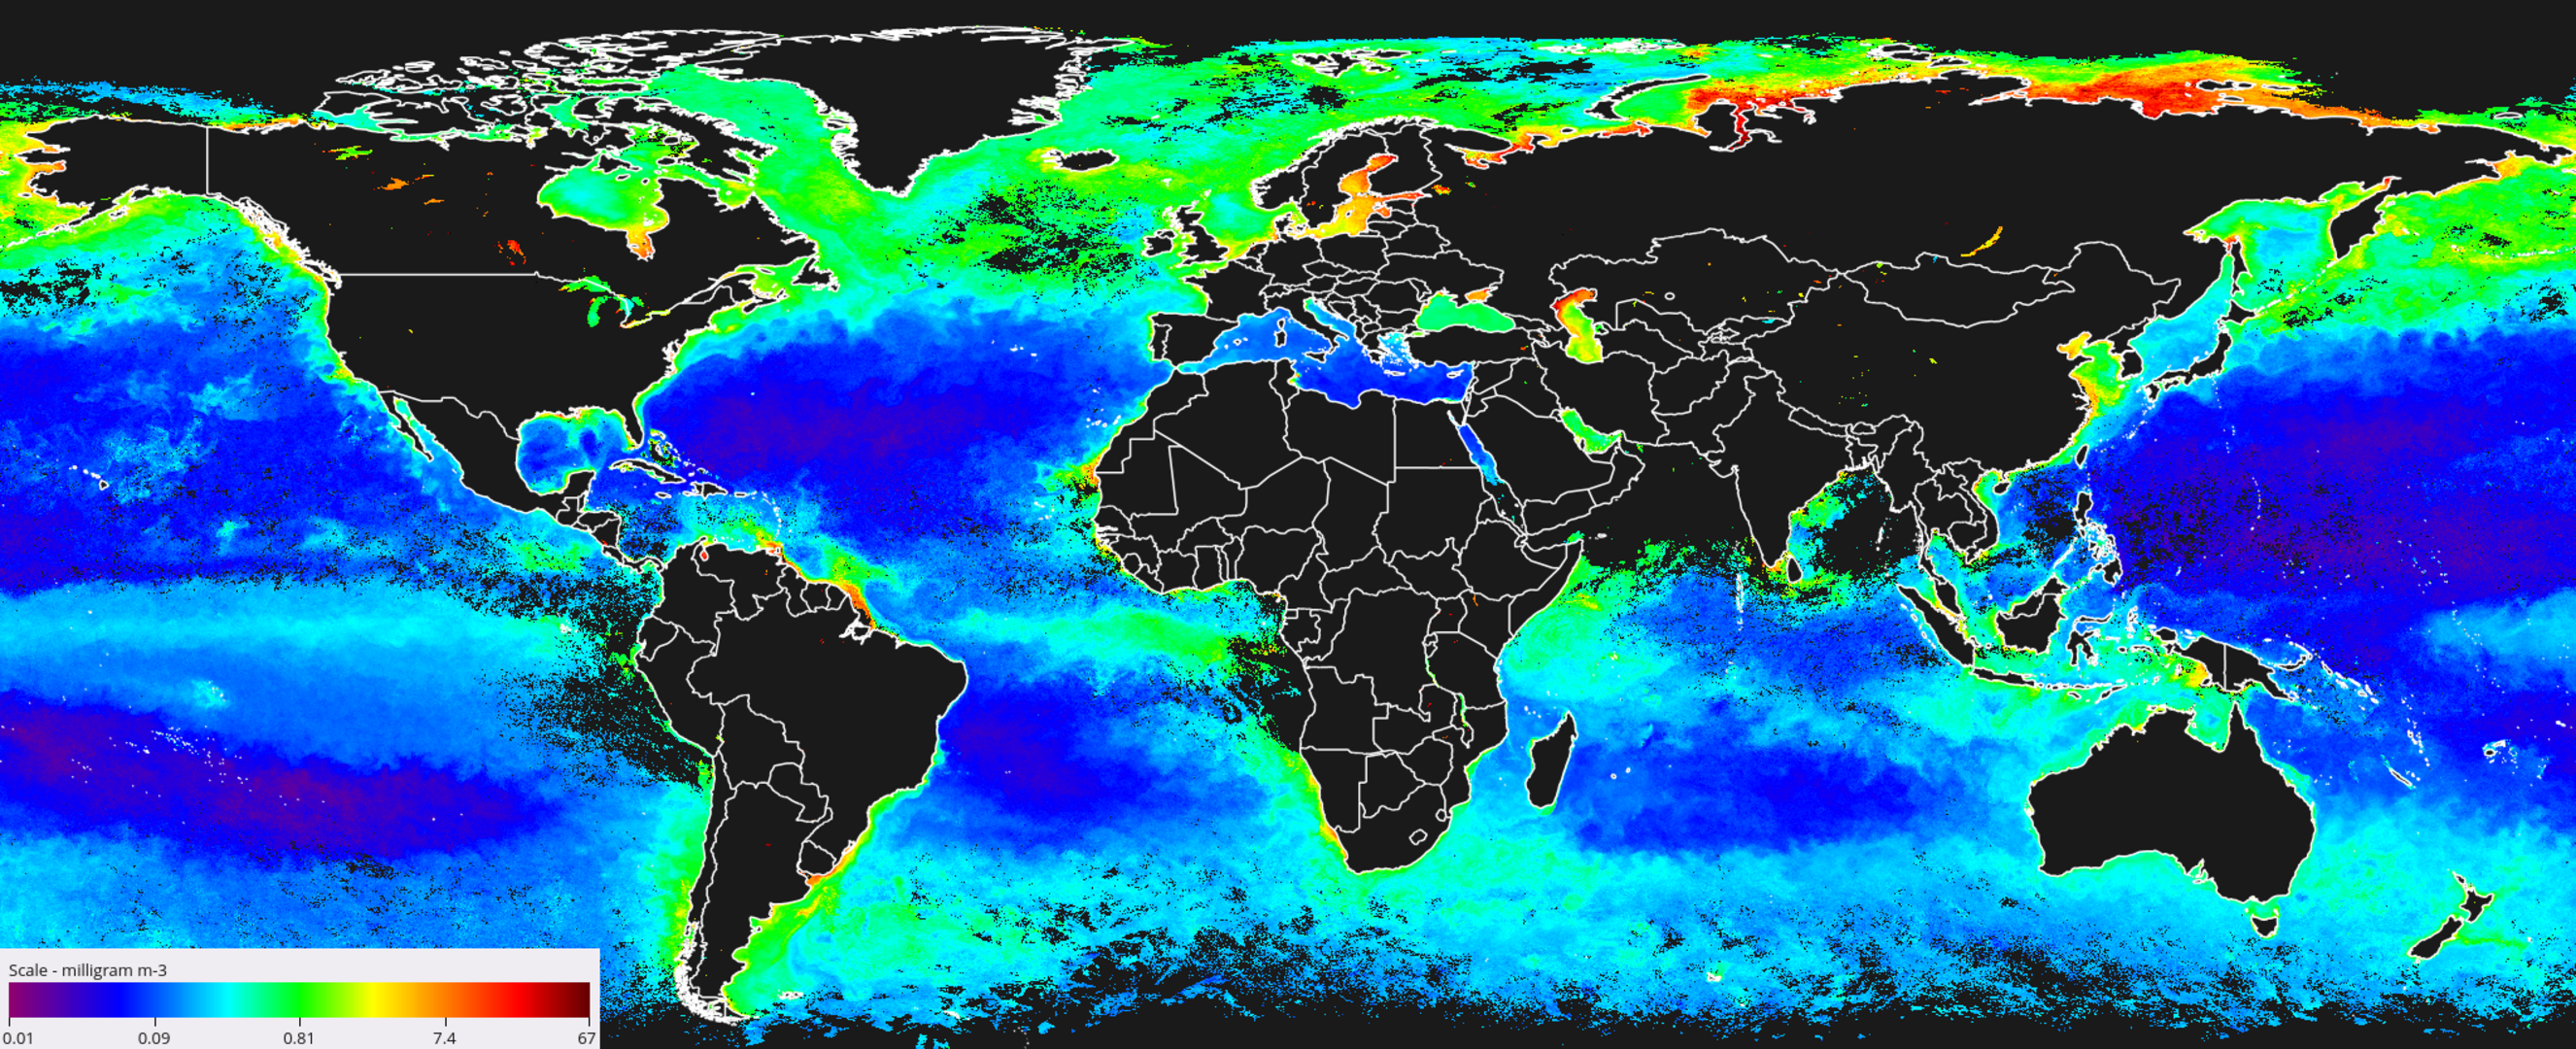 Neural networks help map ocean colour